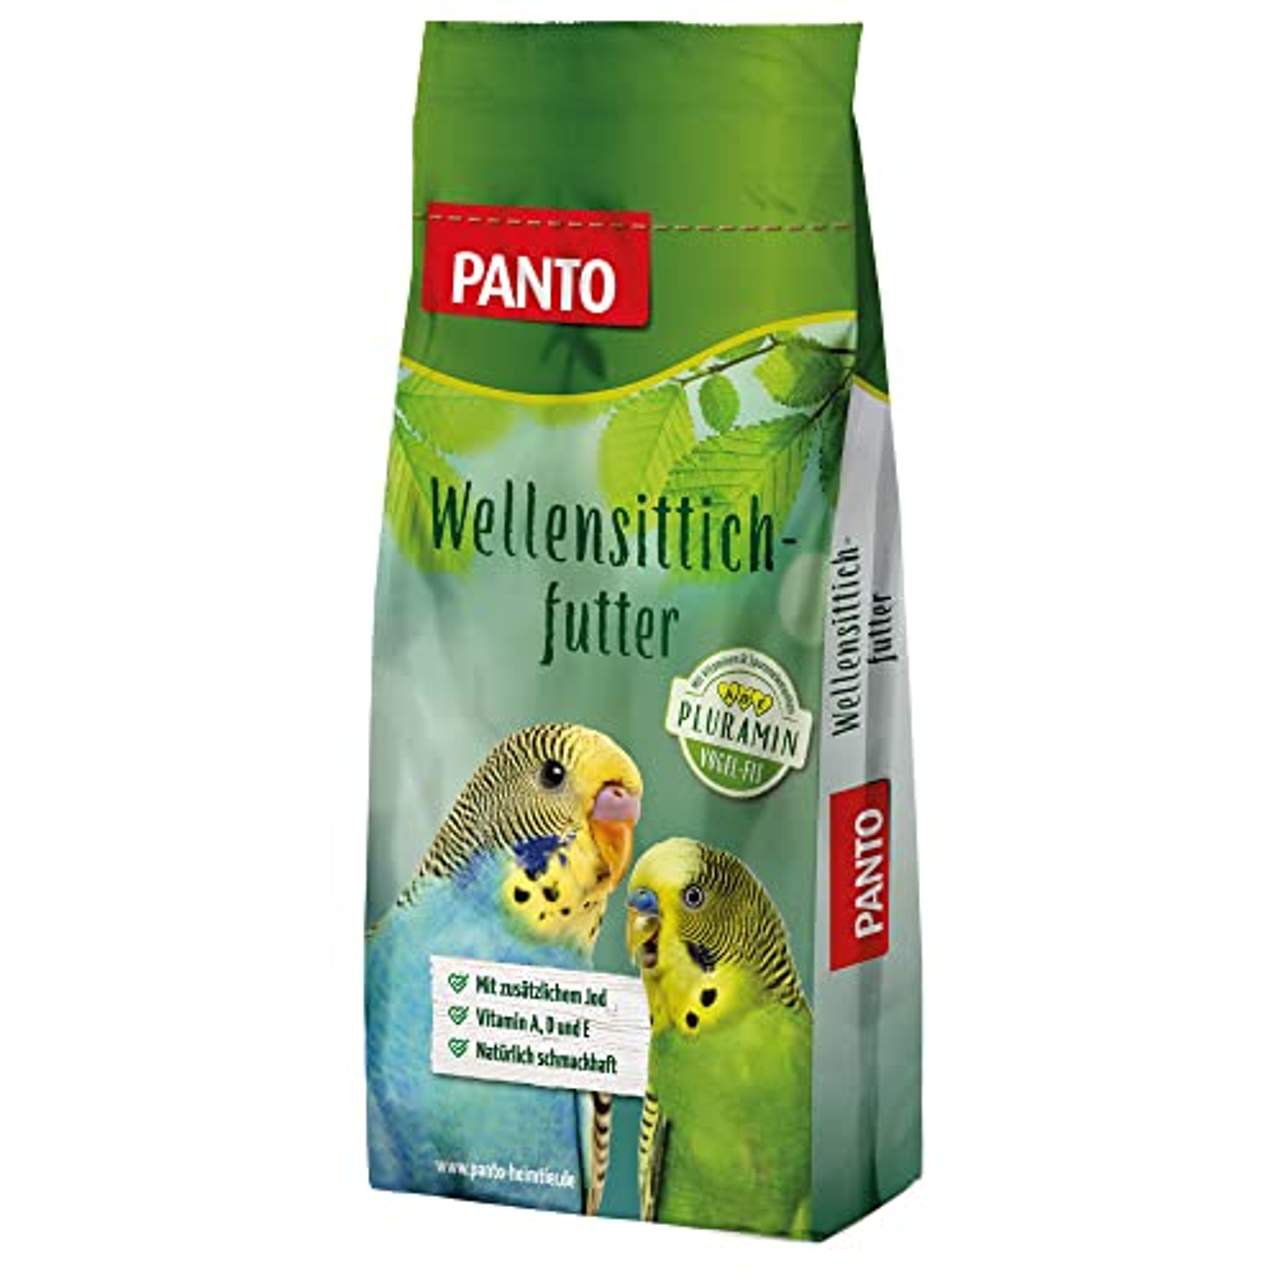 Panto Wellensittichfutter 5er Pack